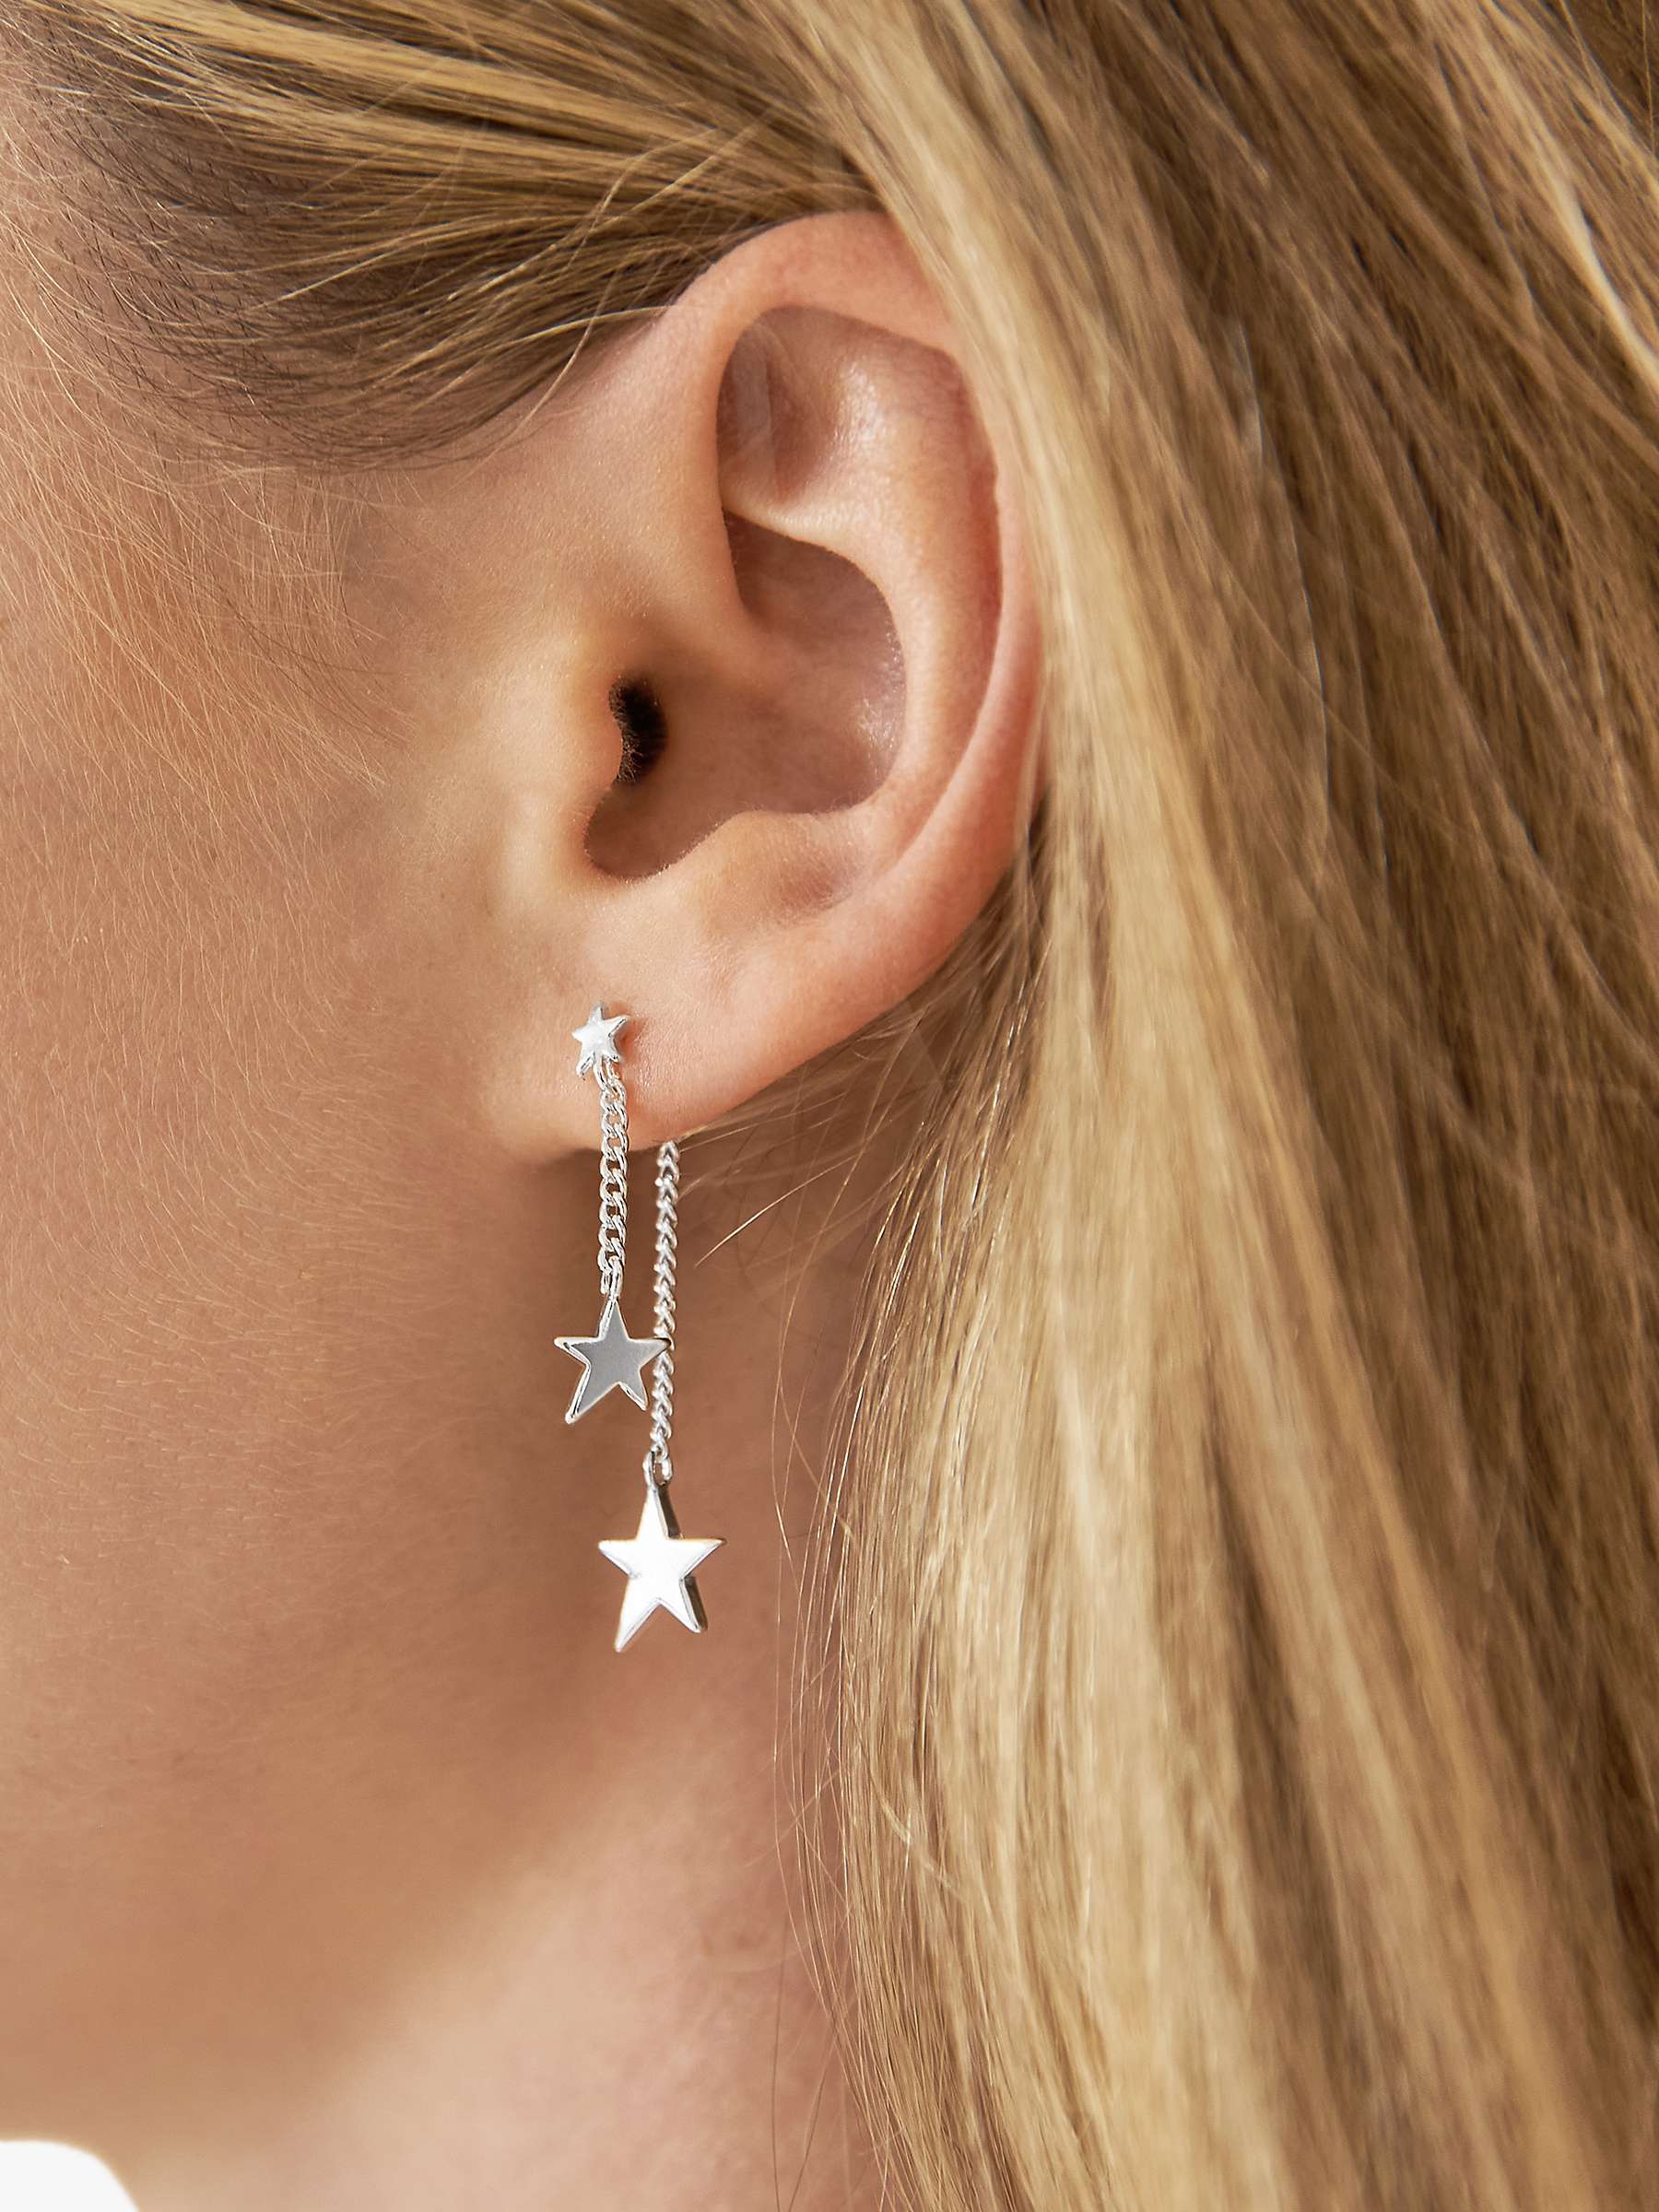 Buy Joma Jewellery Karli Star Drop Earrings, Silver Online at johnlewis.com